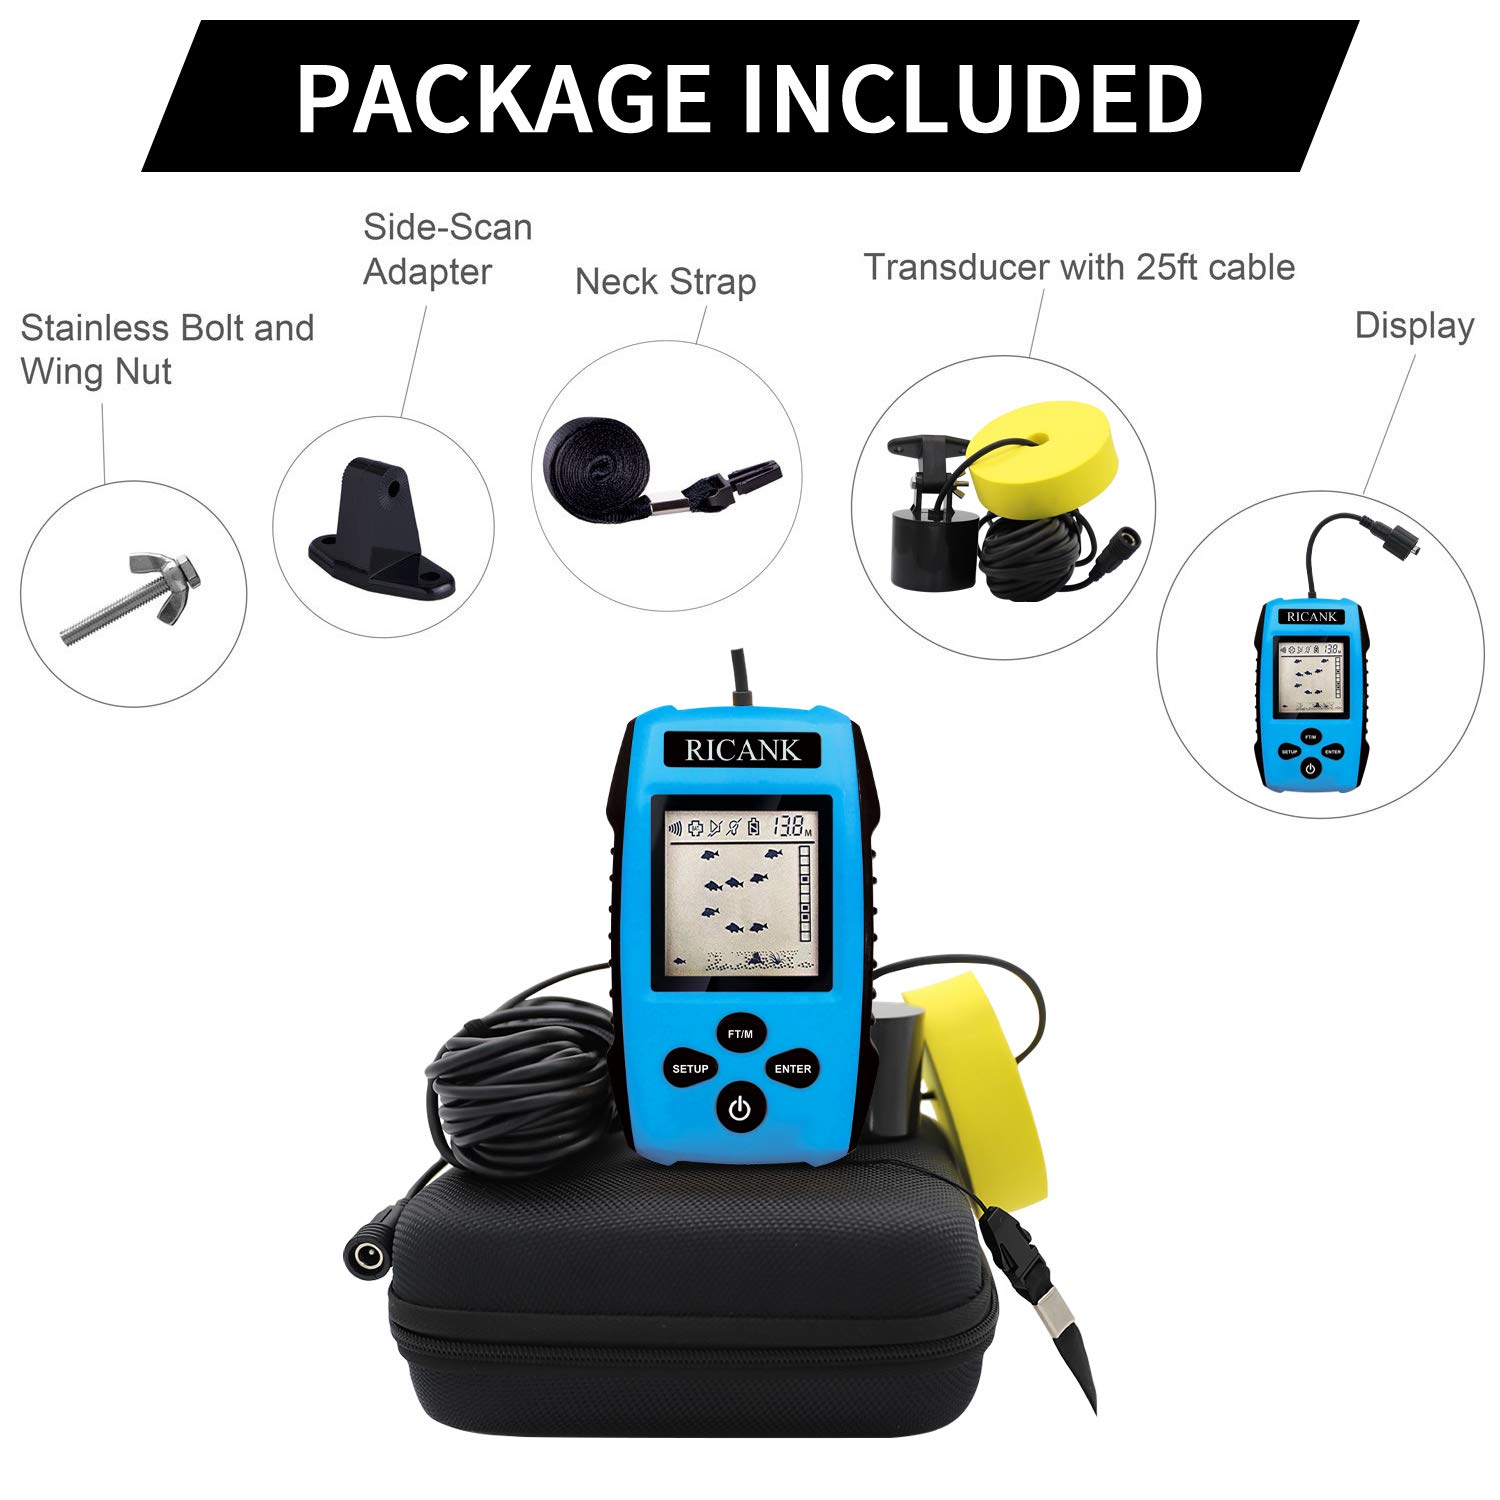 RICANK Portable Fish Finder with Hard Travel EVA Case, Handheld